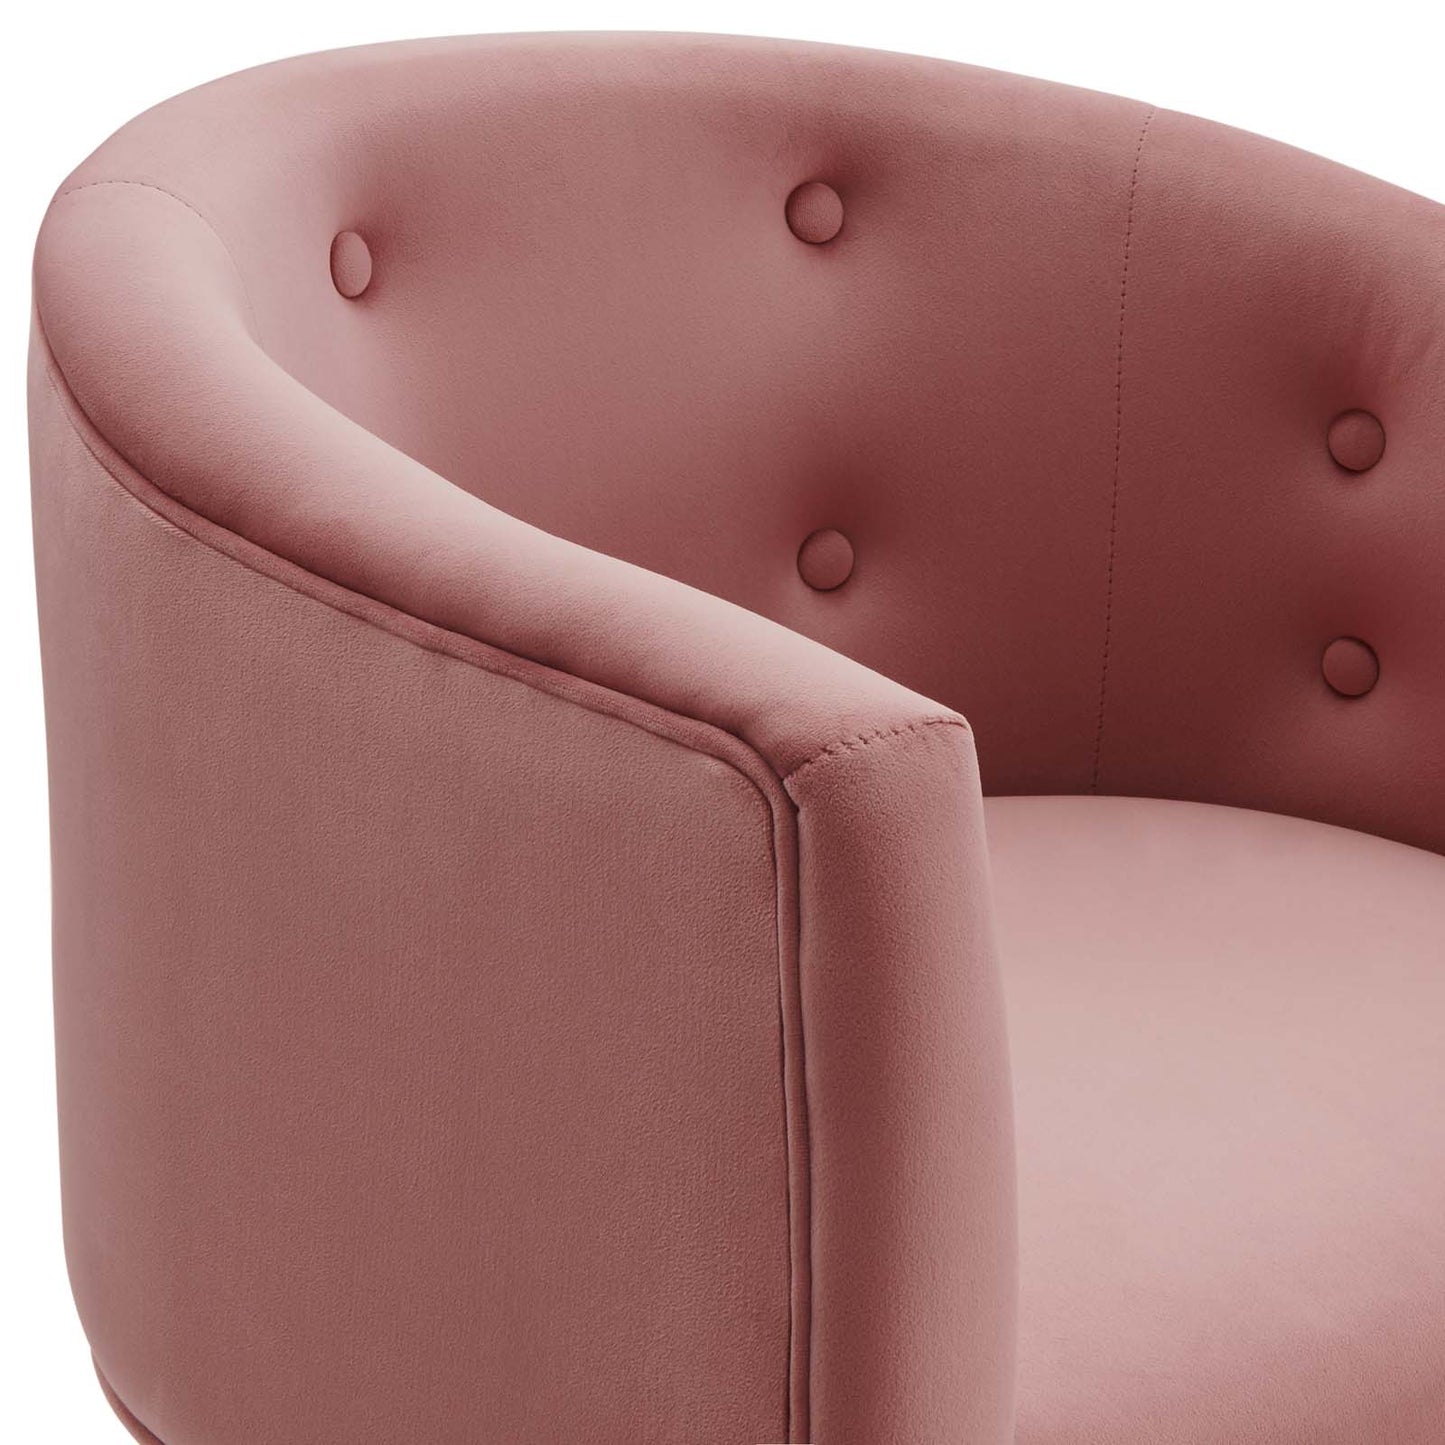 Savour Tufted Performance Velvet Accent Chair Dusty Rose EEI-3903-DUS